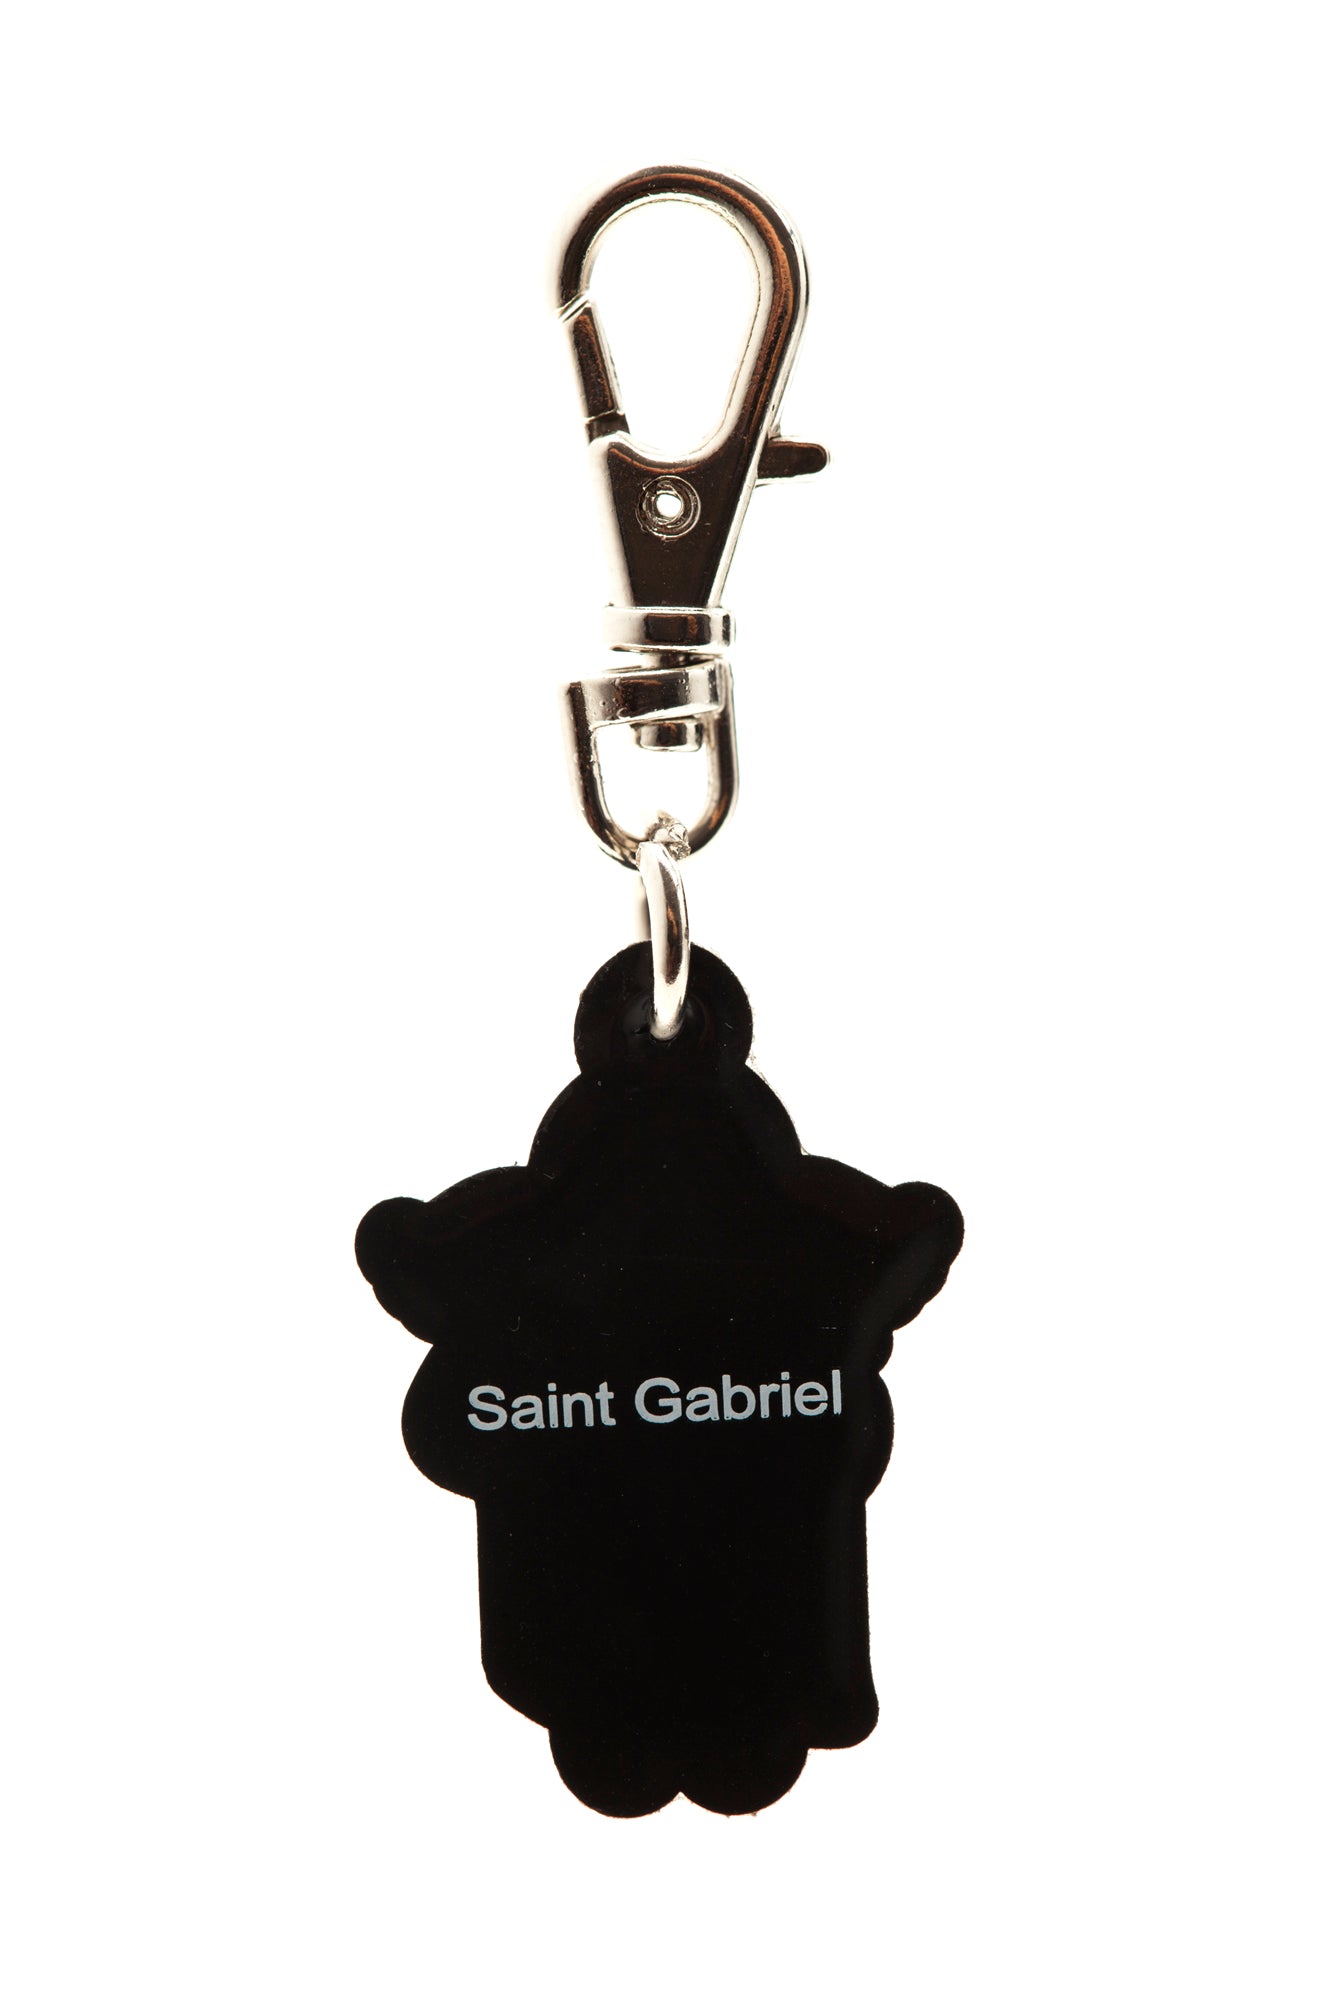 Saint Gabriel charm